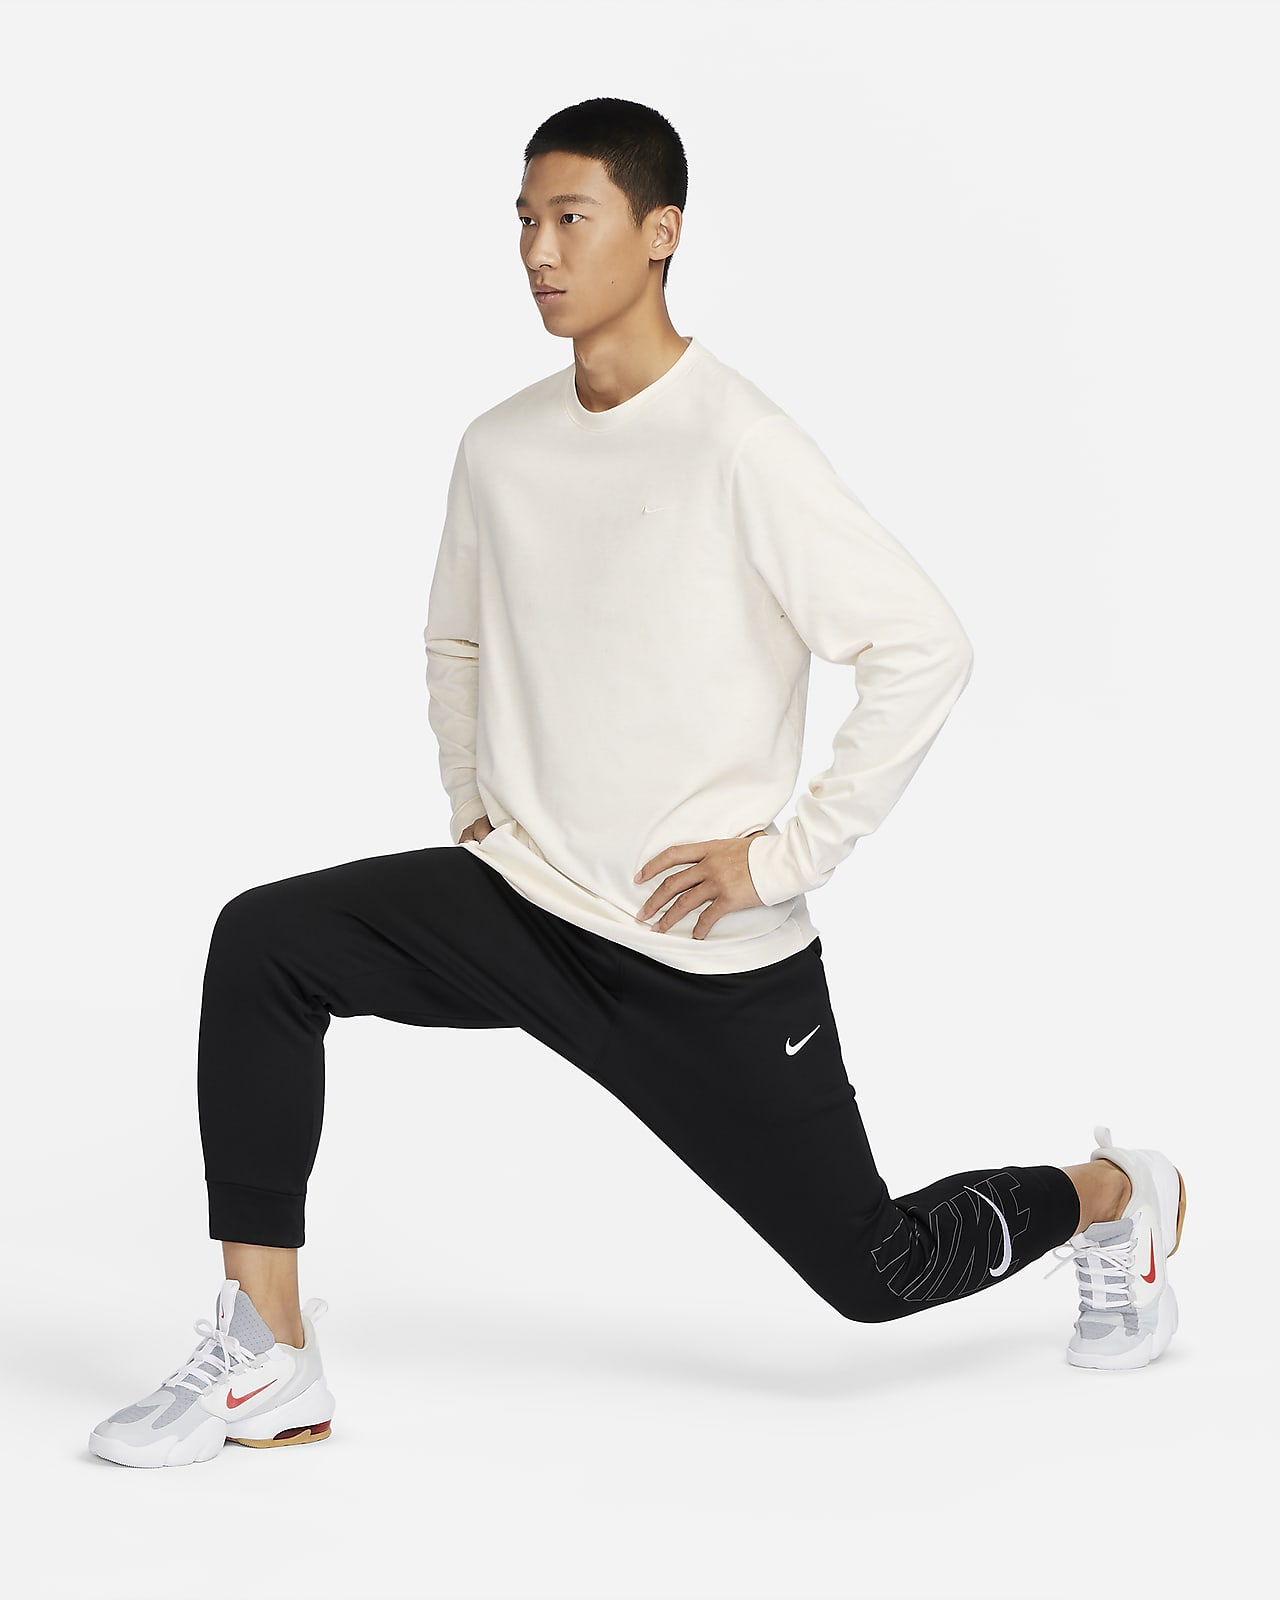 Nike Primary Men's Dri-FIT Long-Sleeve Versatile Top.